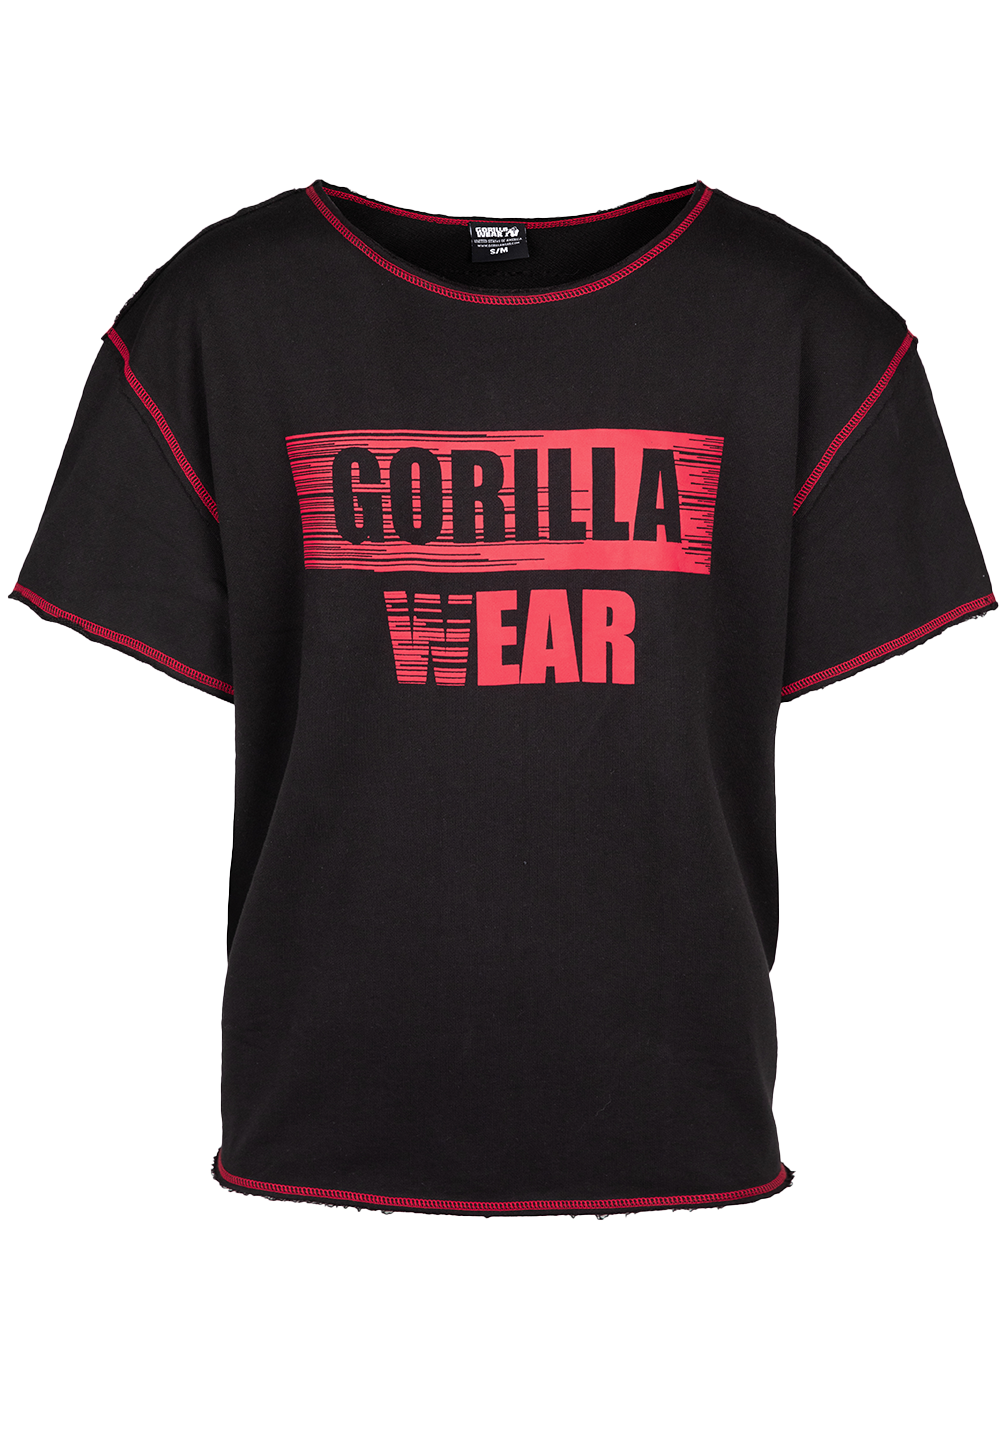 Оверсайз футболка Wallace Workout Top - Black/Red от Gorilla Wear